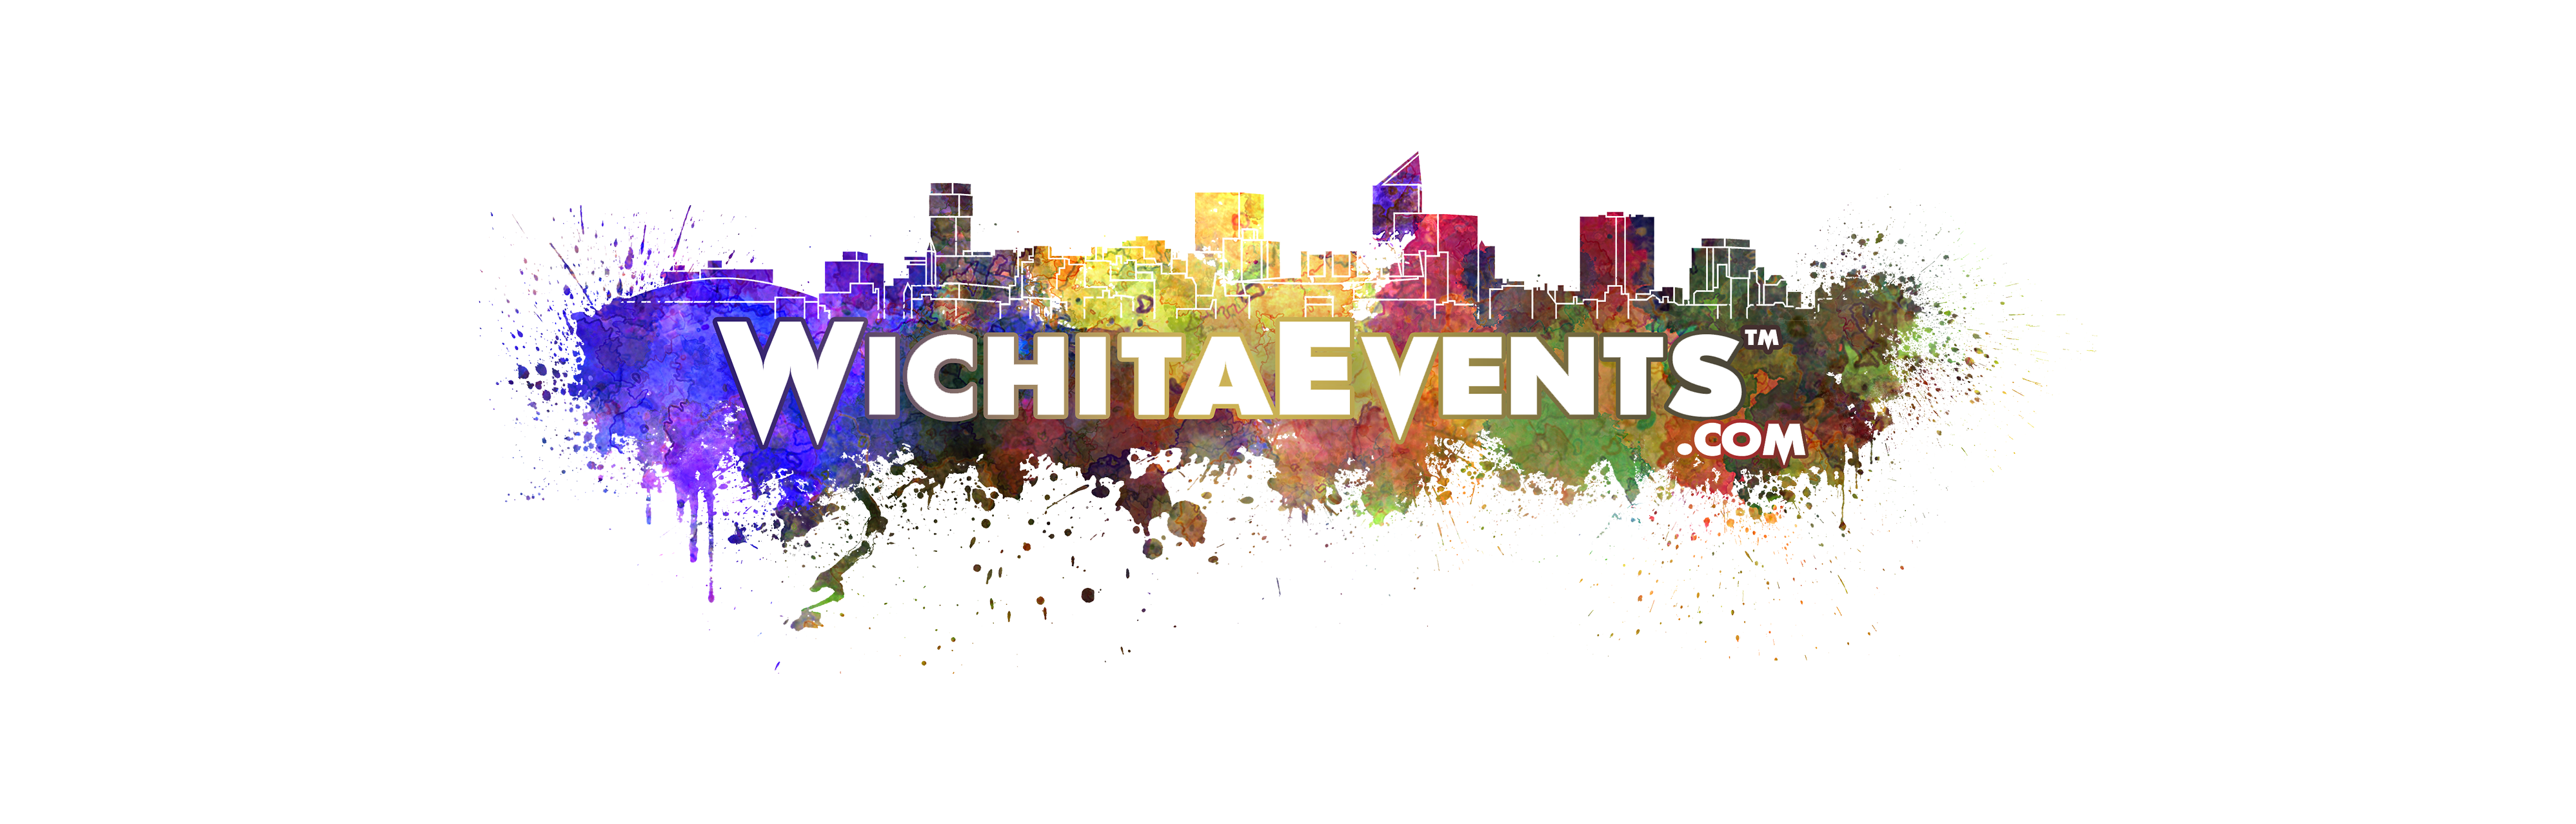 Wichita Events - LARGE LOGO Banner